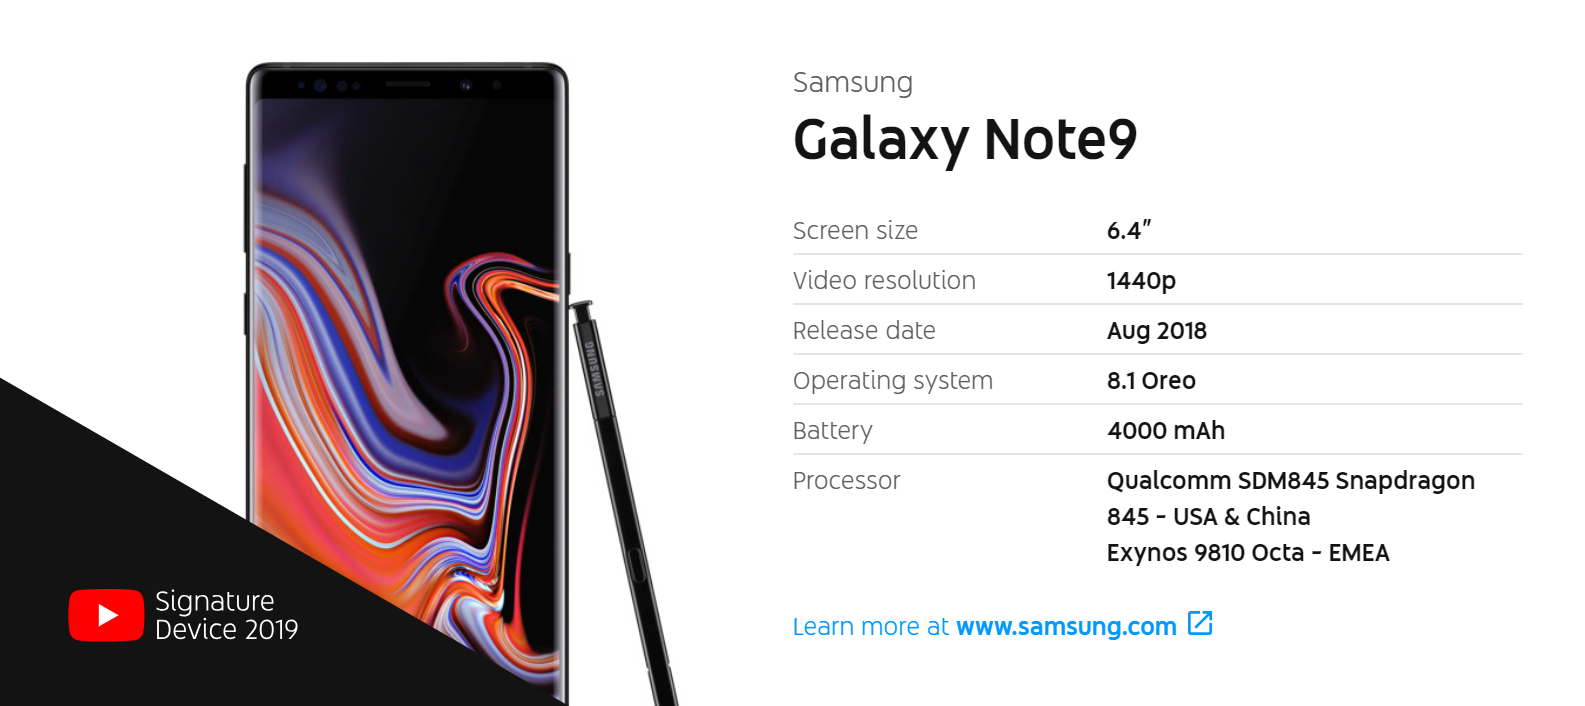 Note 9 сравнить. Note 9 Samsung габариты. Самсунг галакси нот 9 Размеры. Samsung Galaxy Note 9 Размеры. Самсунг Гэлакси ноут 9 габариты.